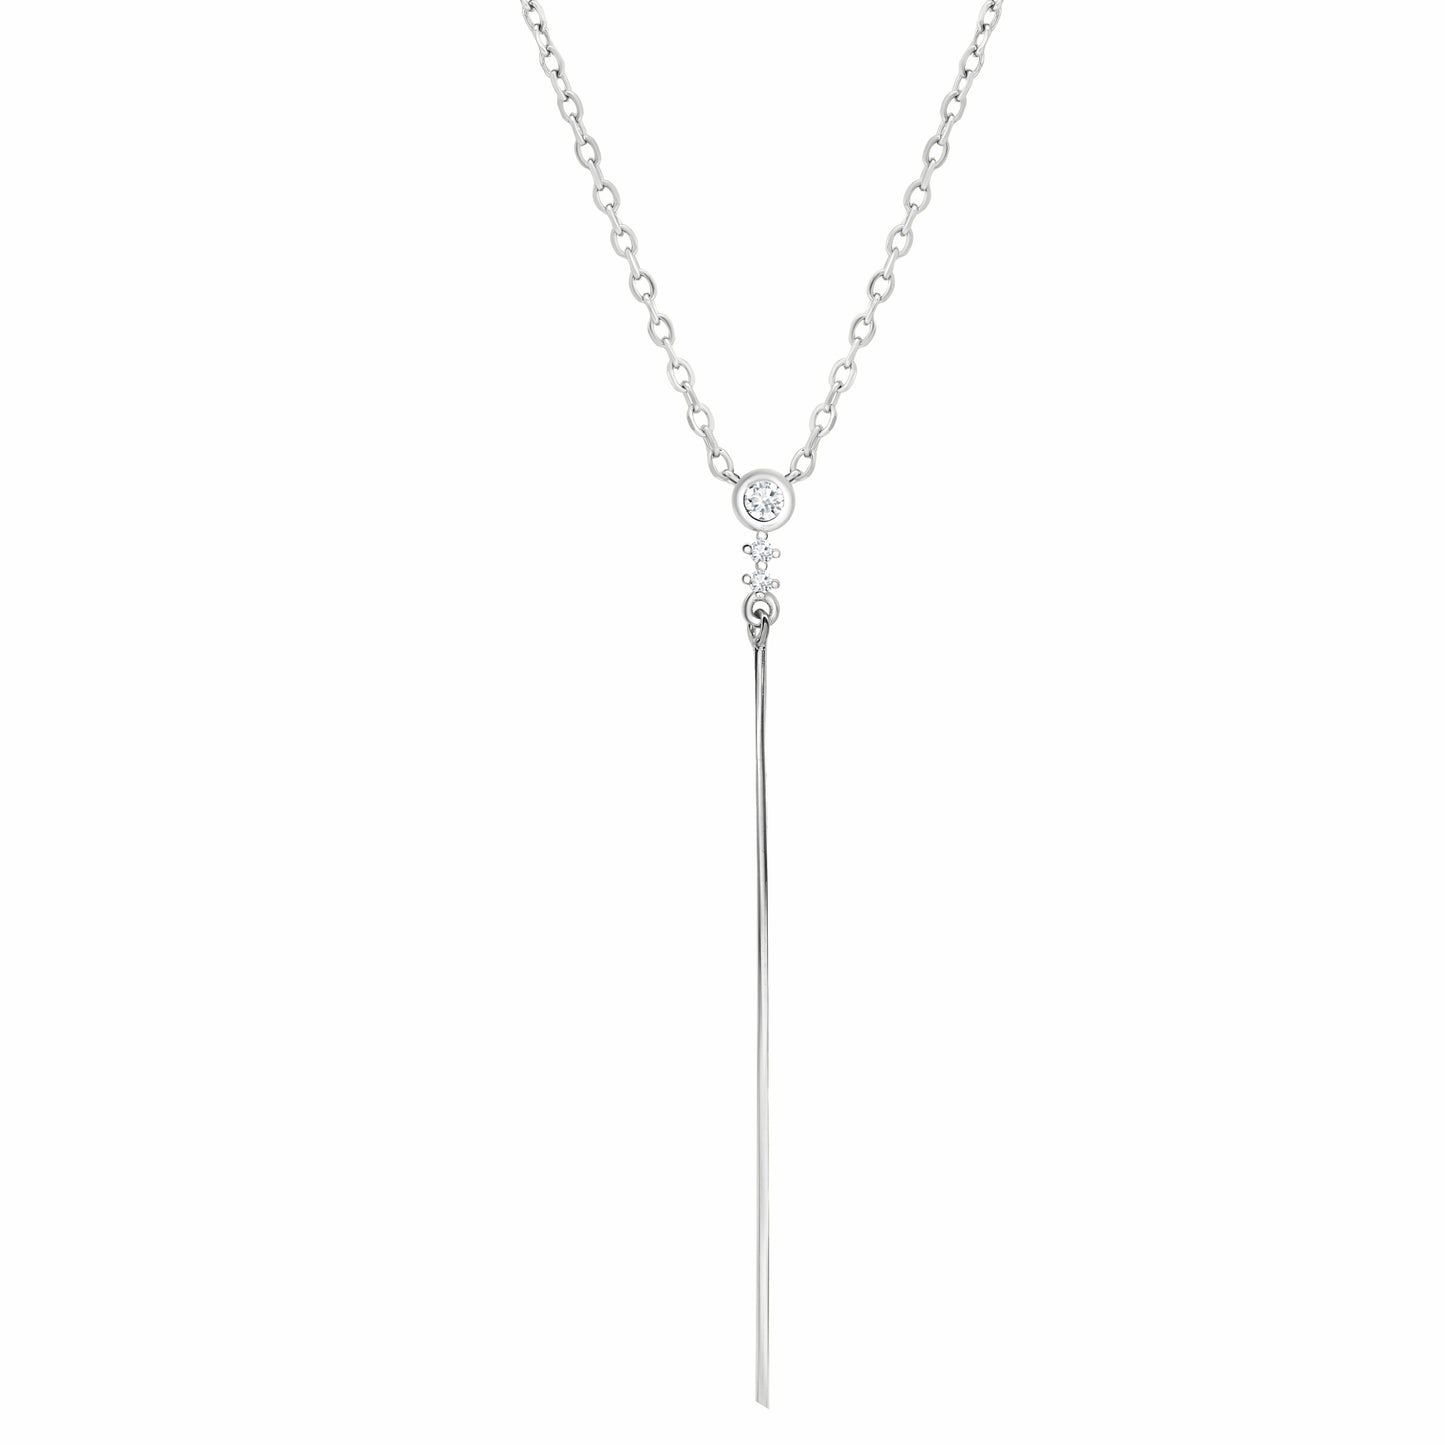 Minimalist Line Silver Necklace